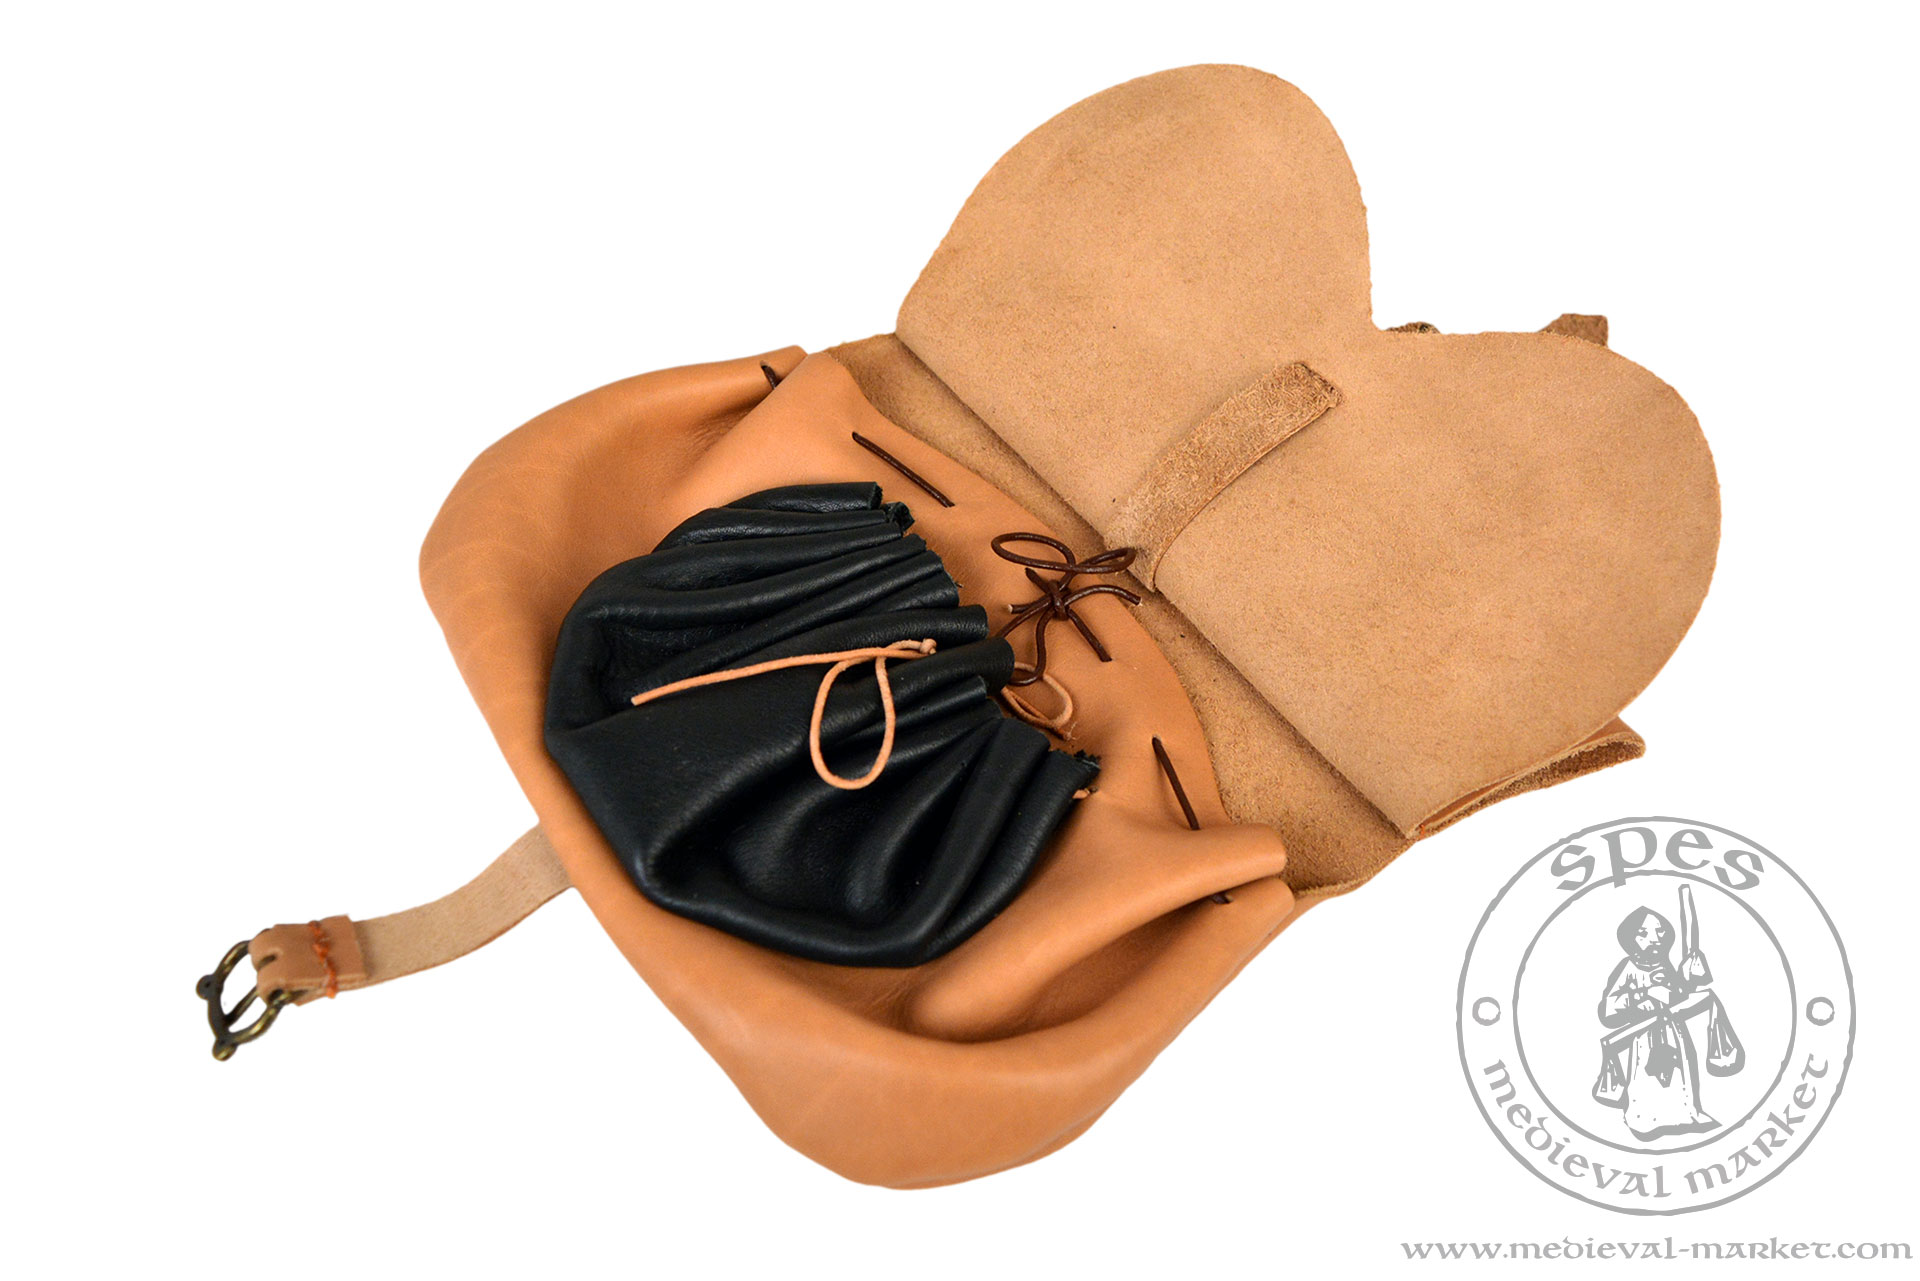 Calvert Large Leather Kidney Bag - MY100804 - LARP Distribution